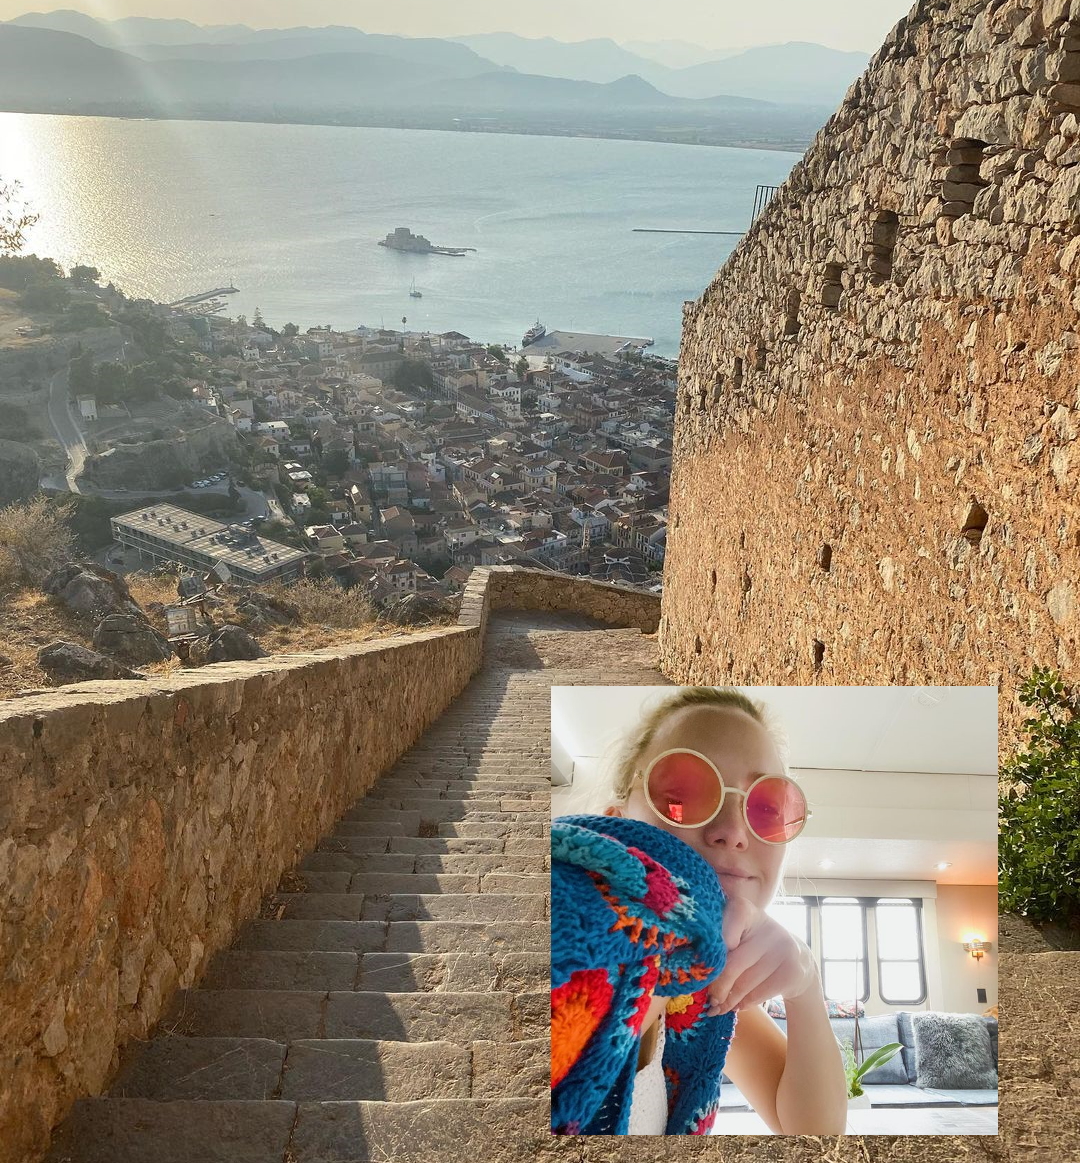 Kate Hudson: Ανέβηκε και τα 999 σκαλιά στο Παλαμίδι! Οι φωτογραφίες από την επίσκεψη στο Ναύπλιο